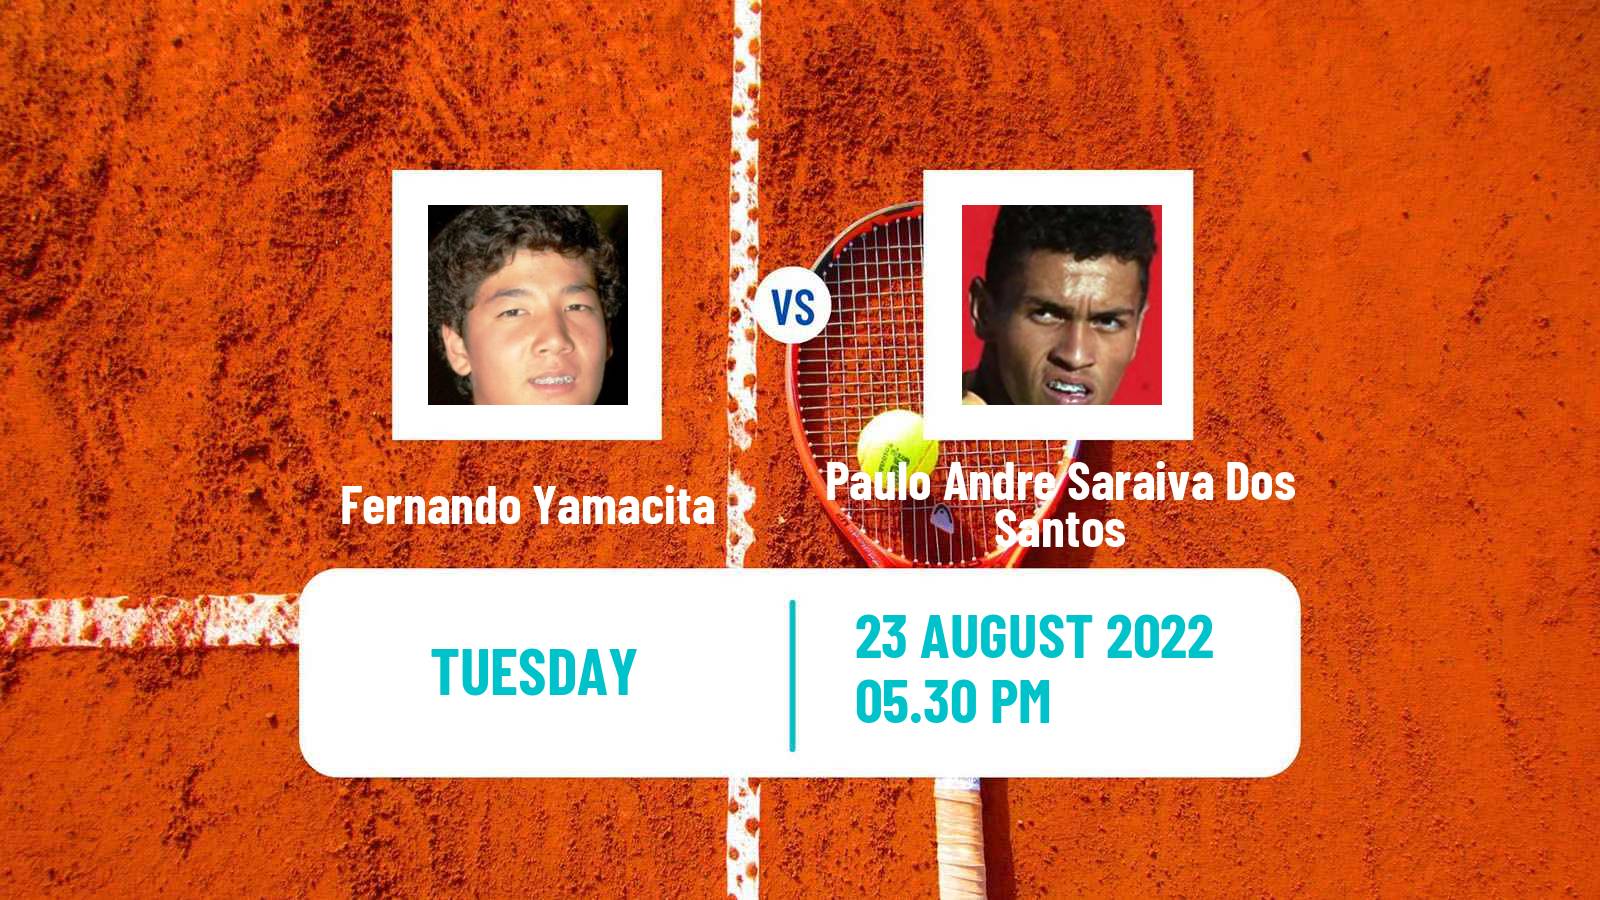 Tennis ITF Tournaments Fernando Yamacita - Paulo Andre Saraiva Dos Santos